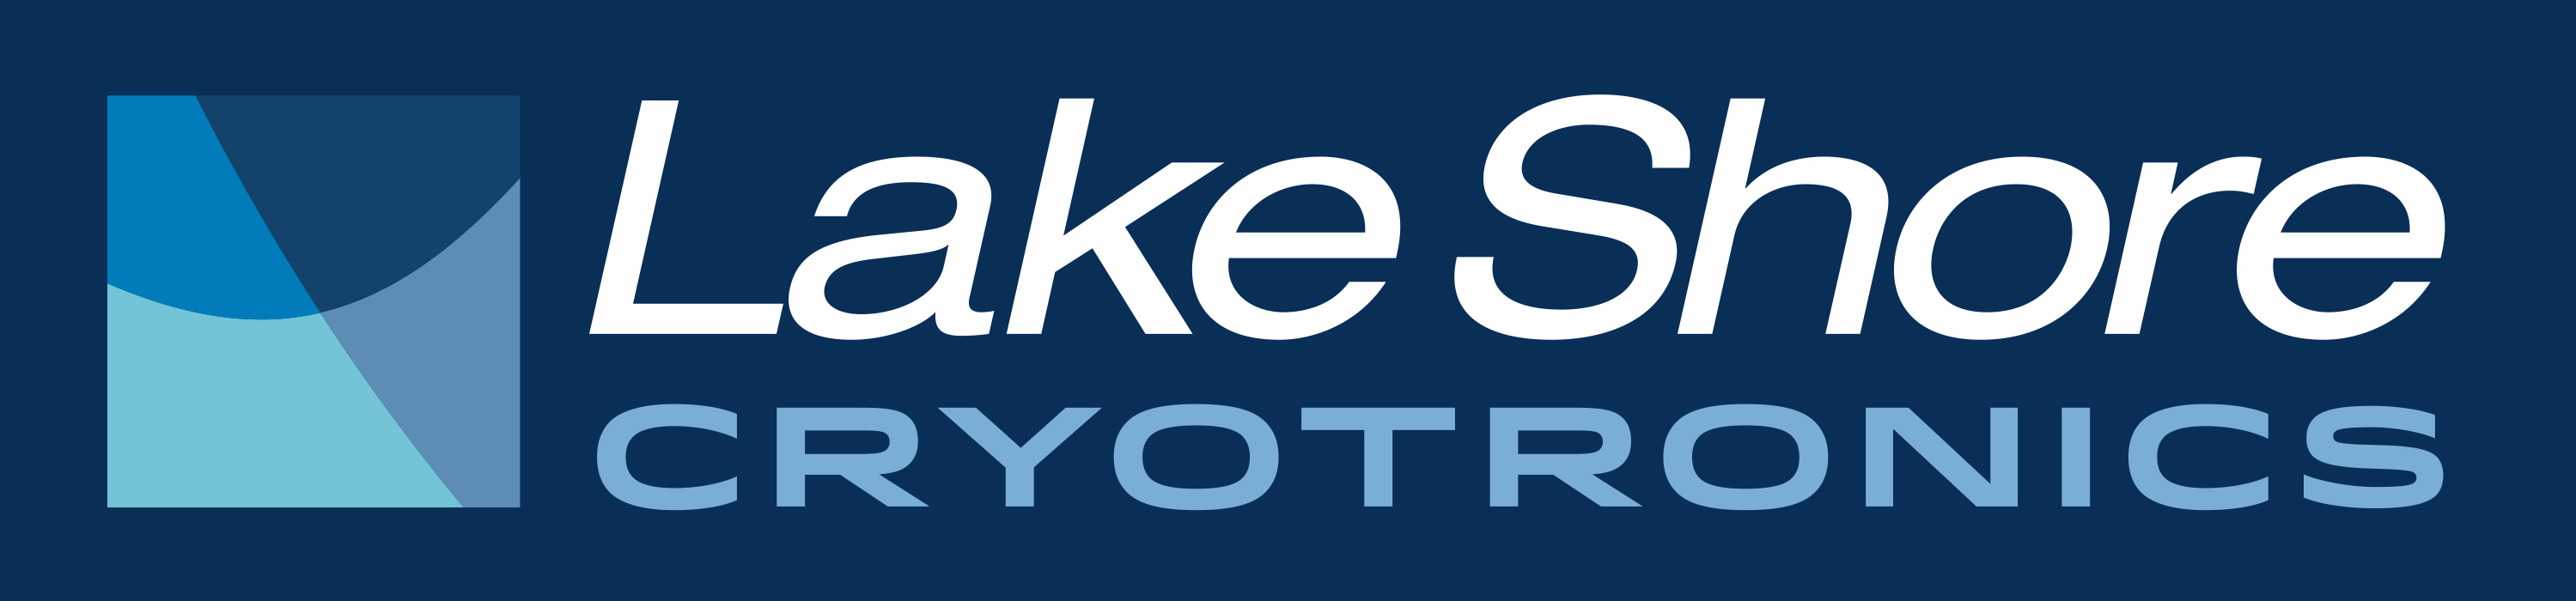 Lake Shore Cryotronics logo - links to Lake Shore website